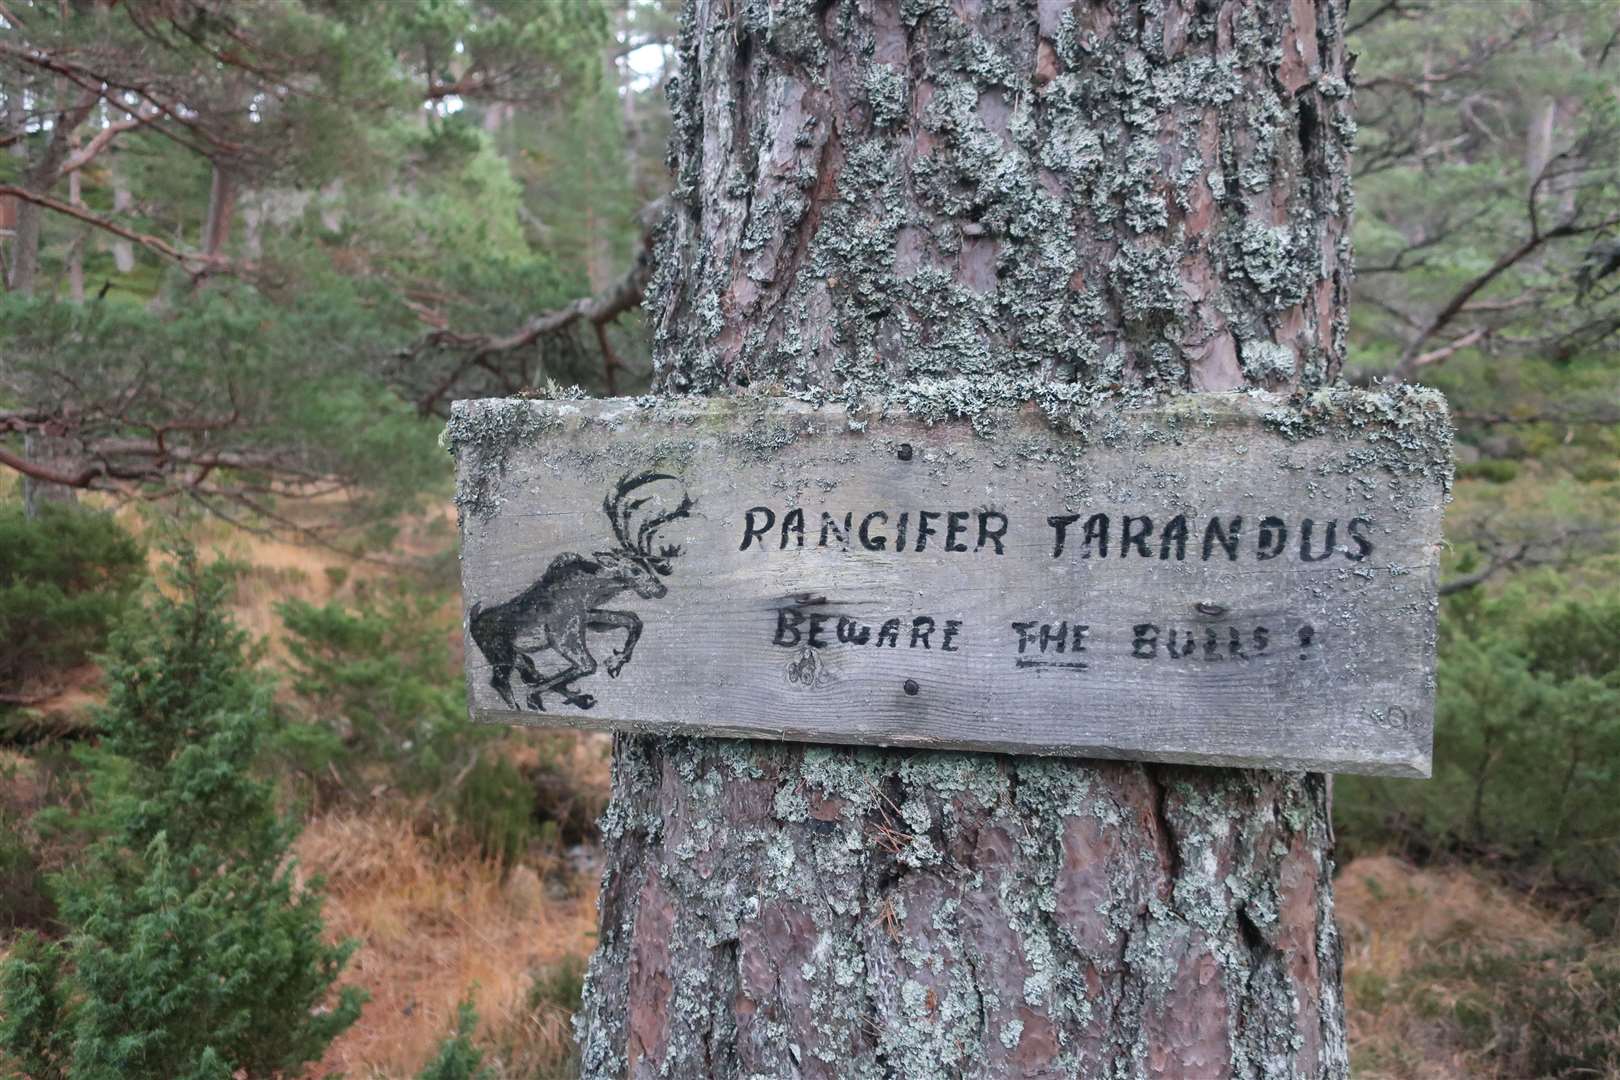 Rangifer tarandus is the scientific name for reindeer.